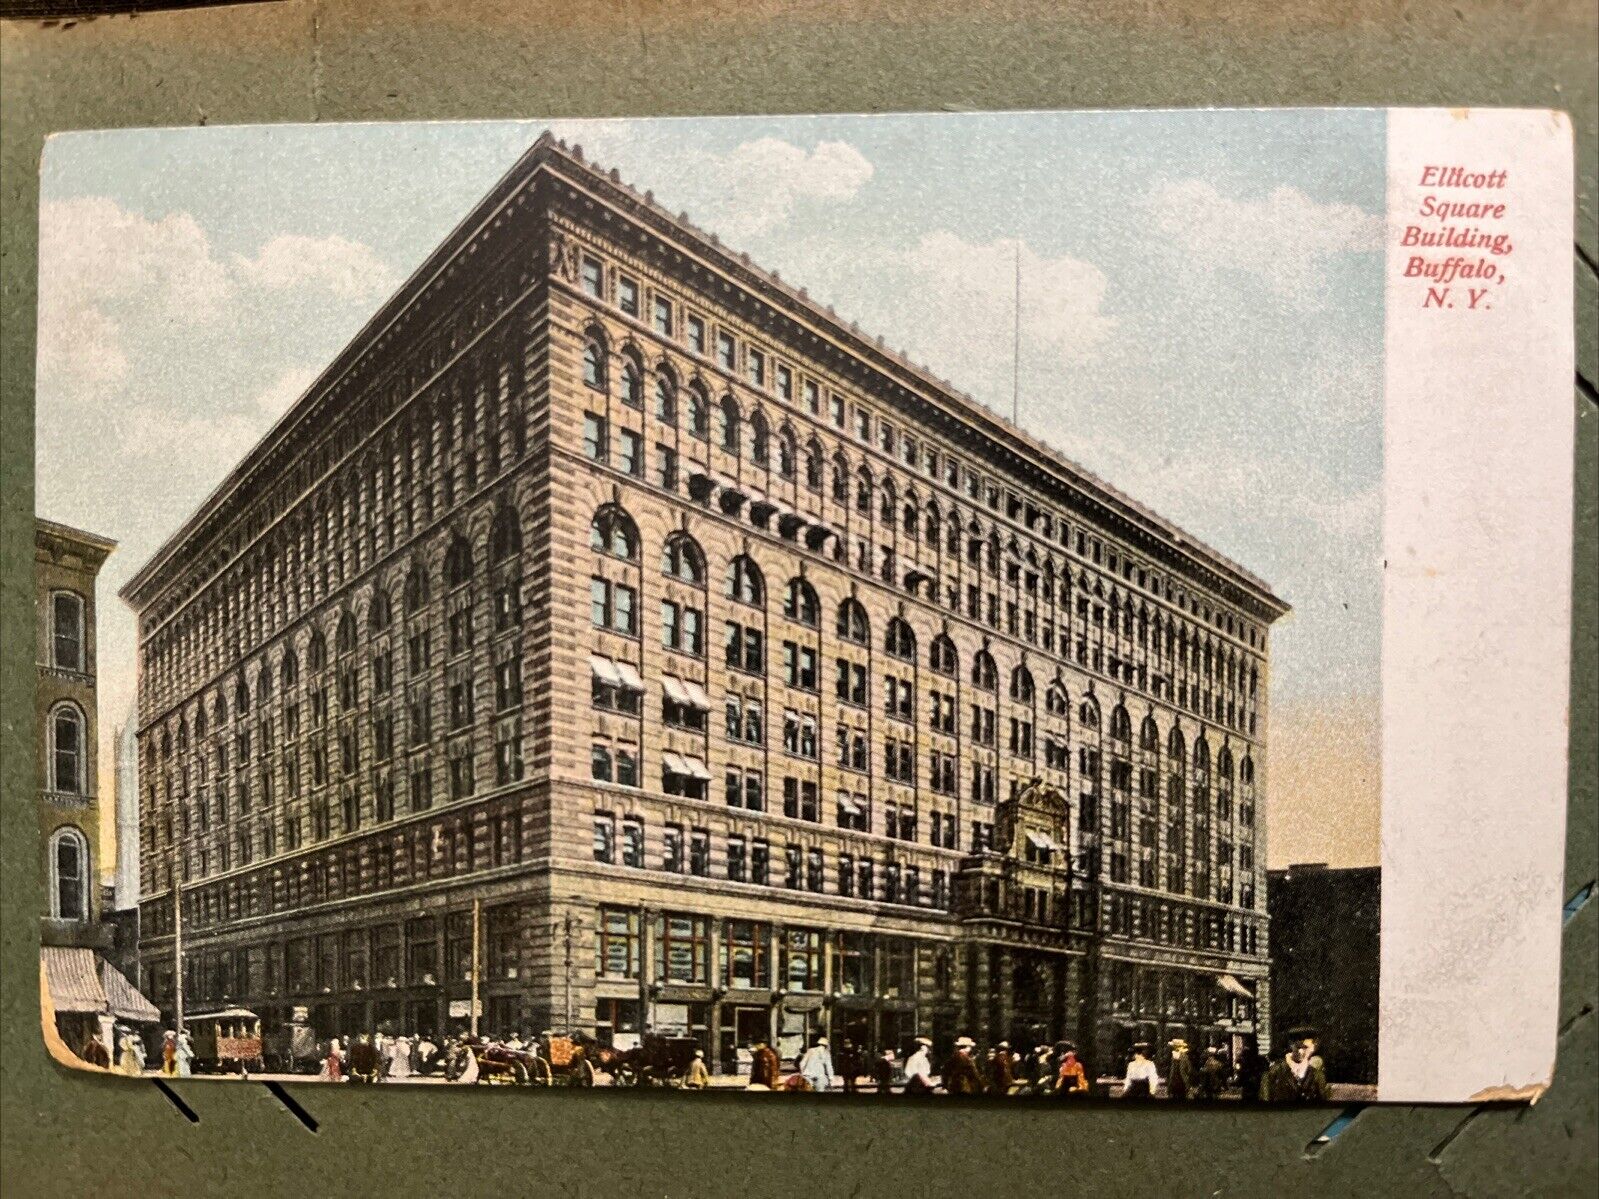 ELLICOTT SQUARE BUILDING BUFFALO NY NEW YORK 1900 German Print CITY ARCHITECTURE